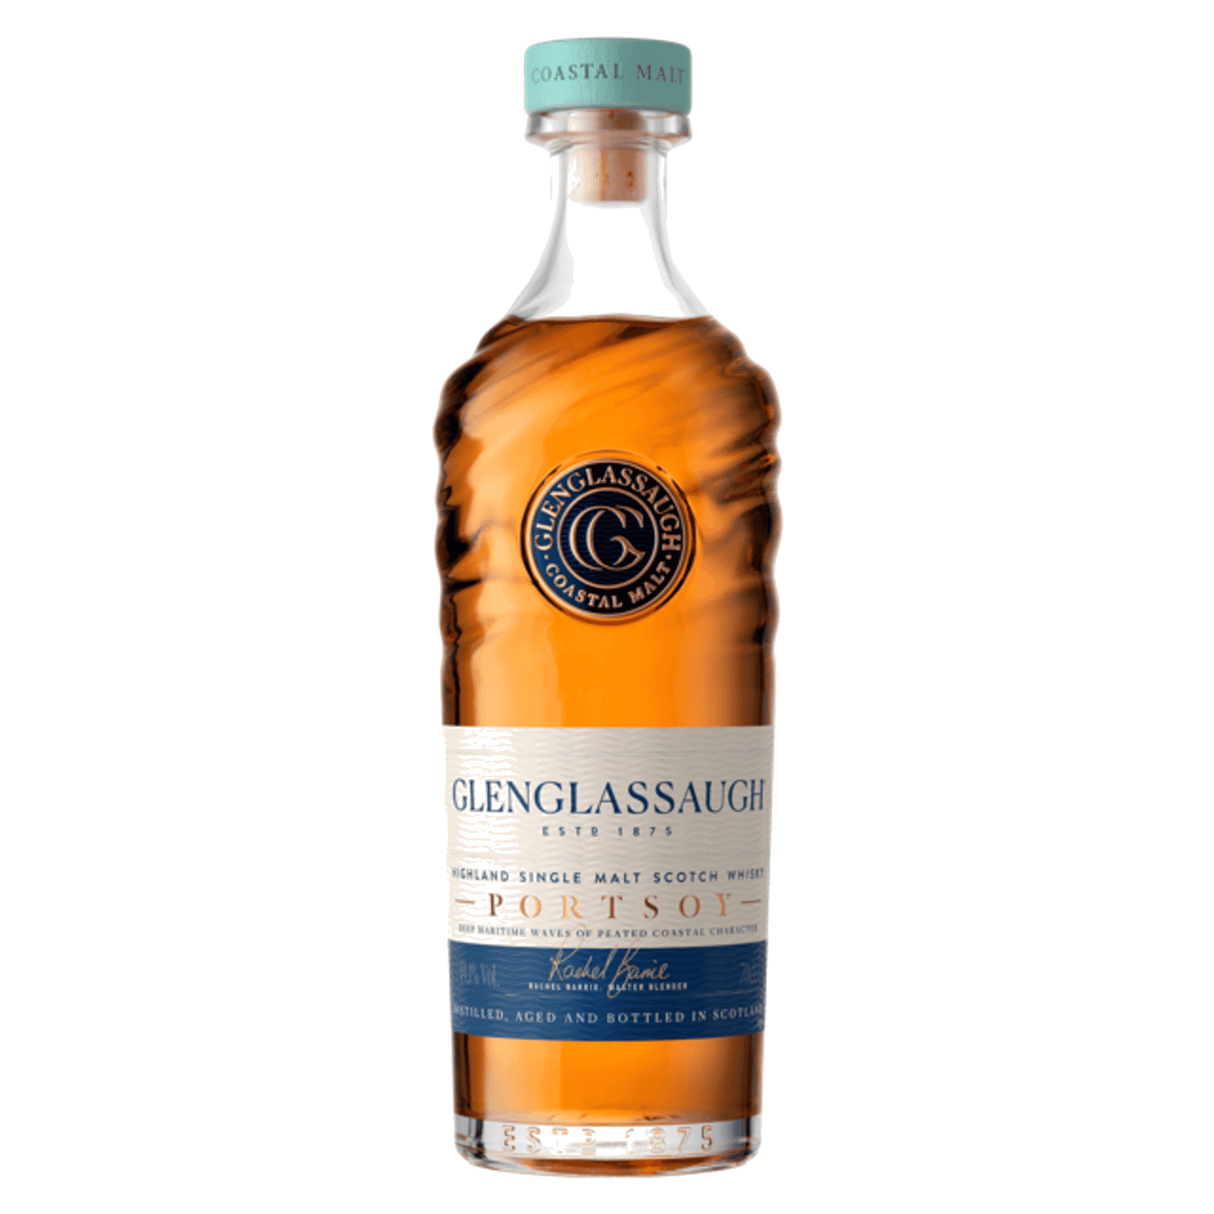 Glenglassaugh Portsoy Highland Single Malt Scotch Whisky 700ml